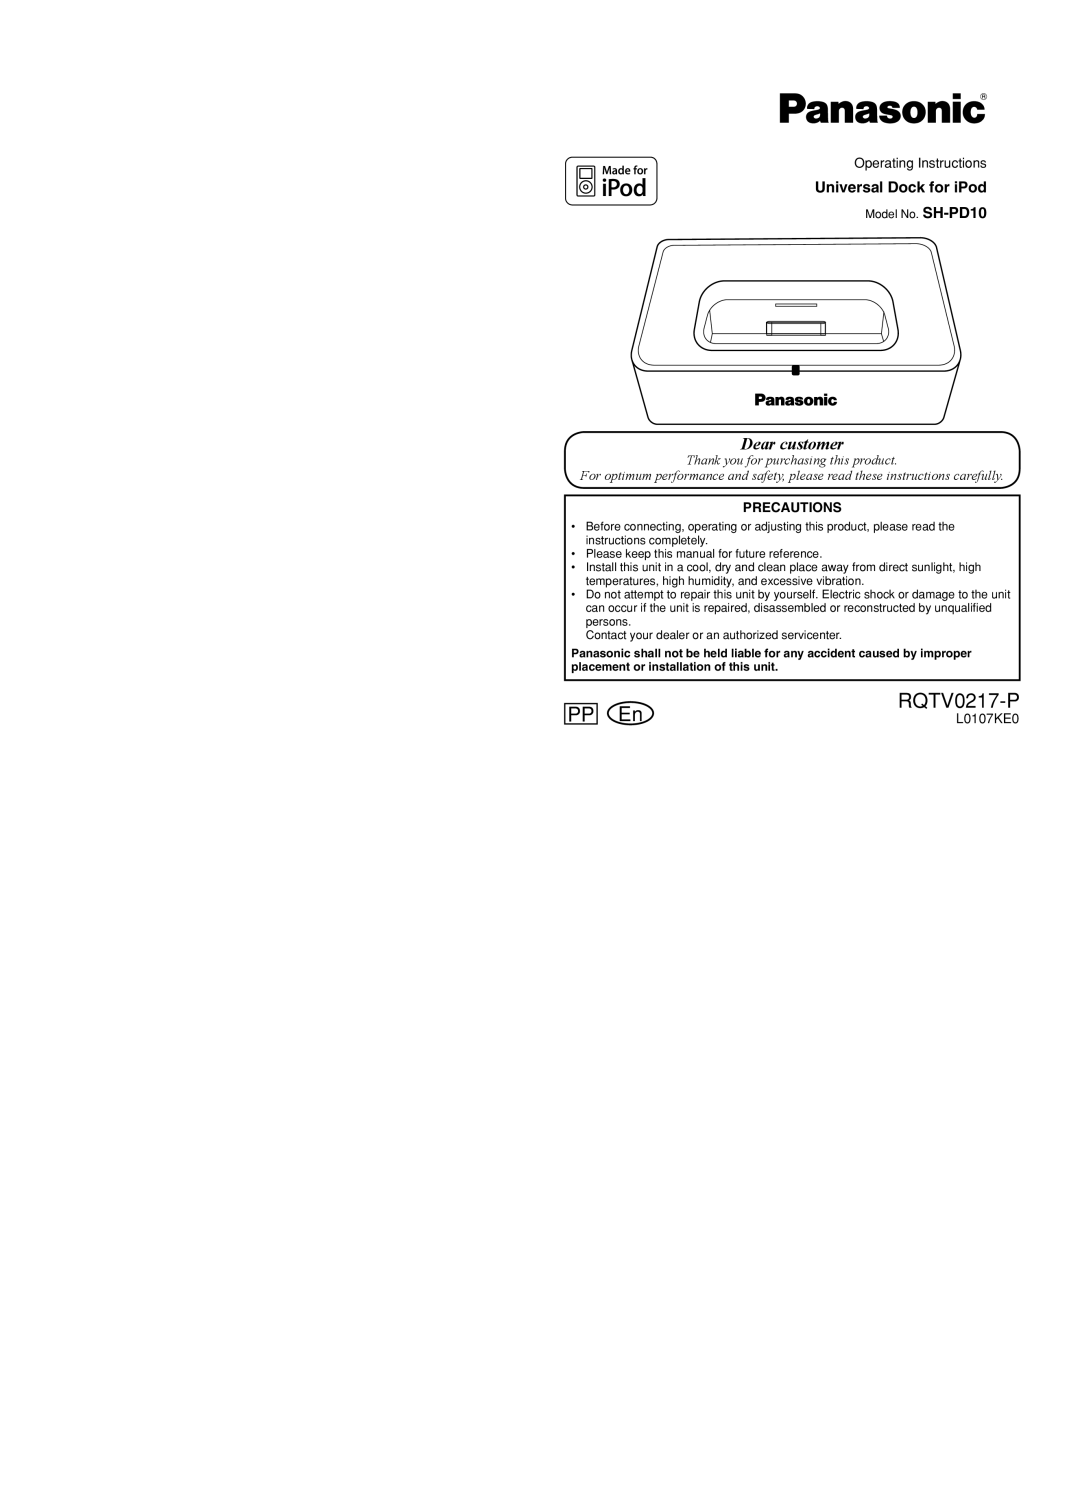 Panasonic SH-PD10 warranty Precautions, PP En, RQTV0217-P, Dear customer, Universal Dock for iPod 